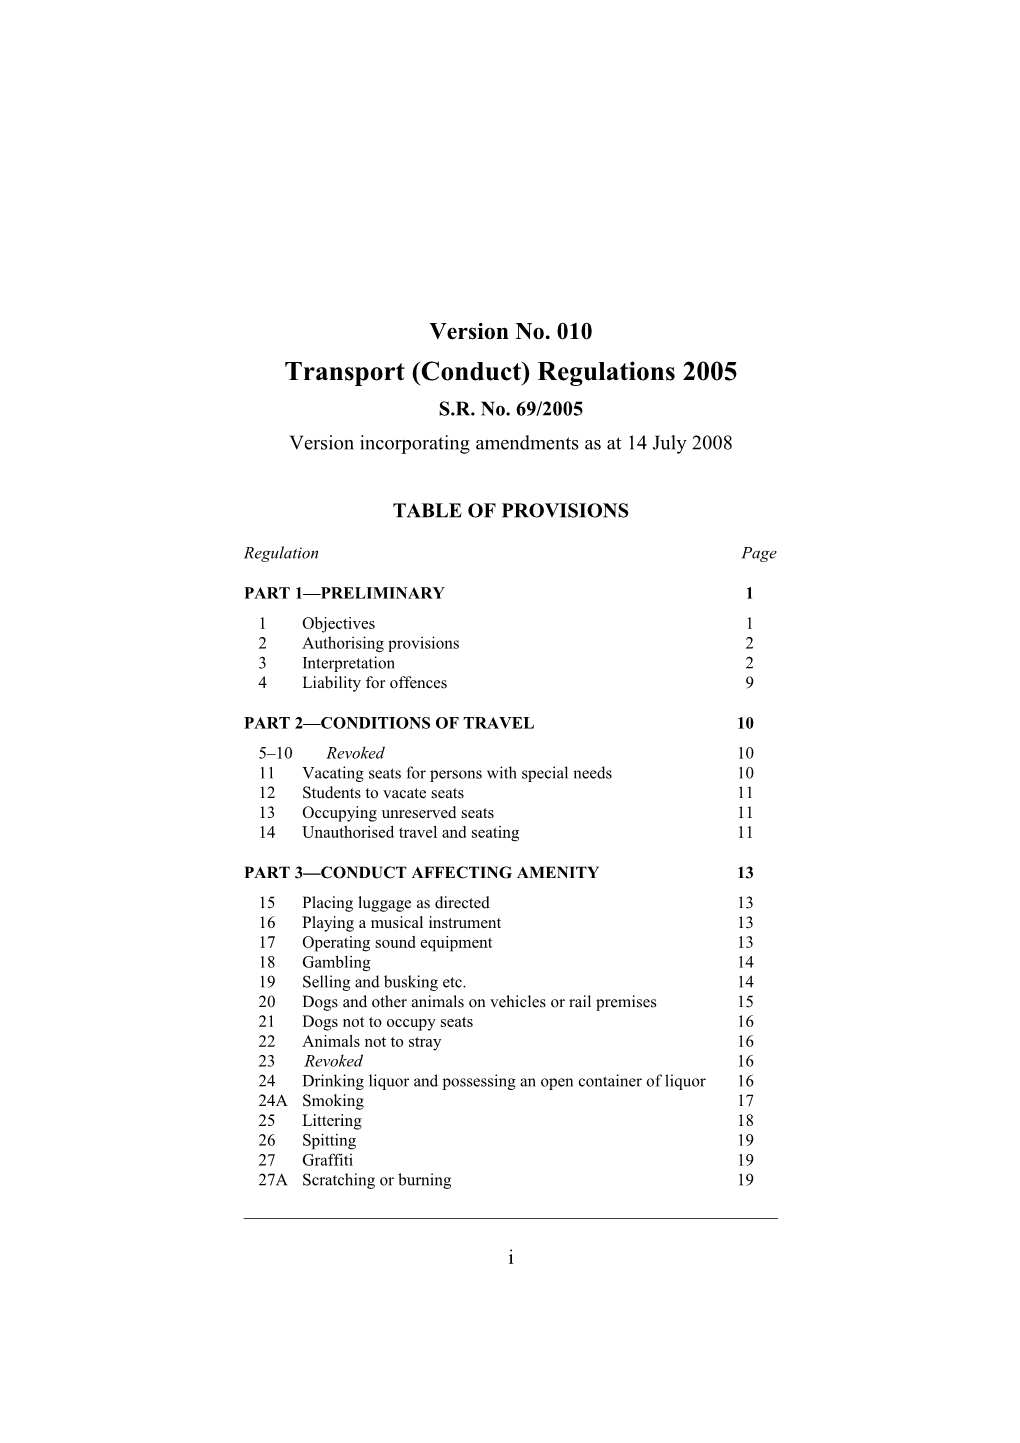 Transport (Conduct) Regulations 2005